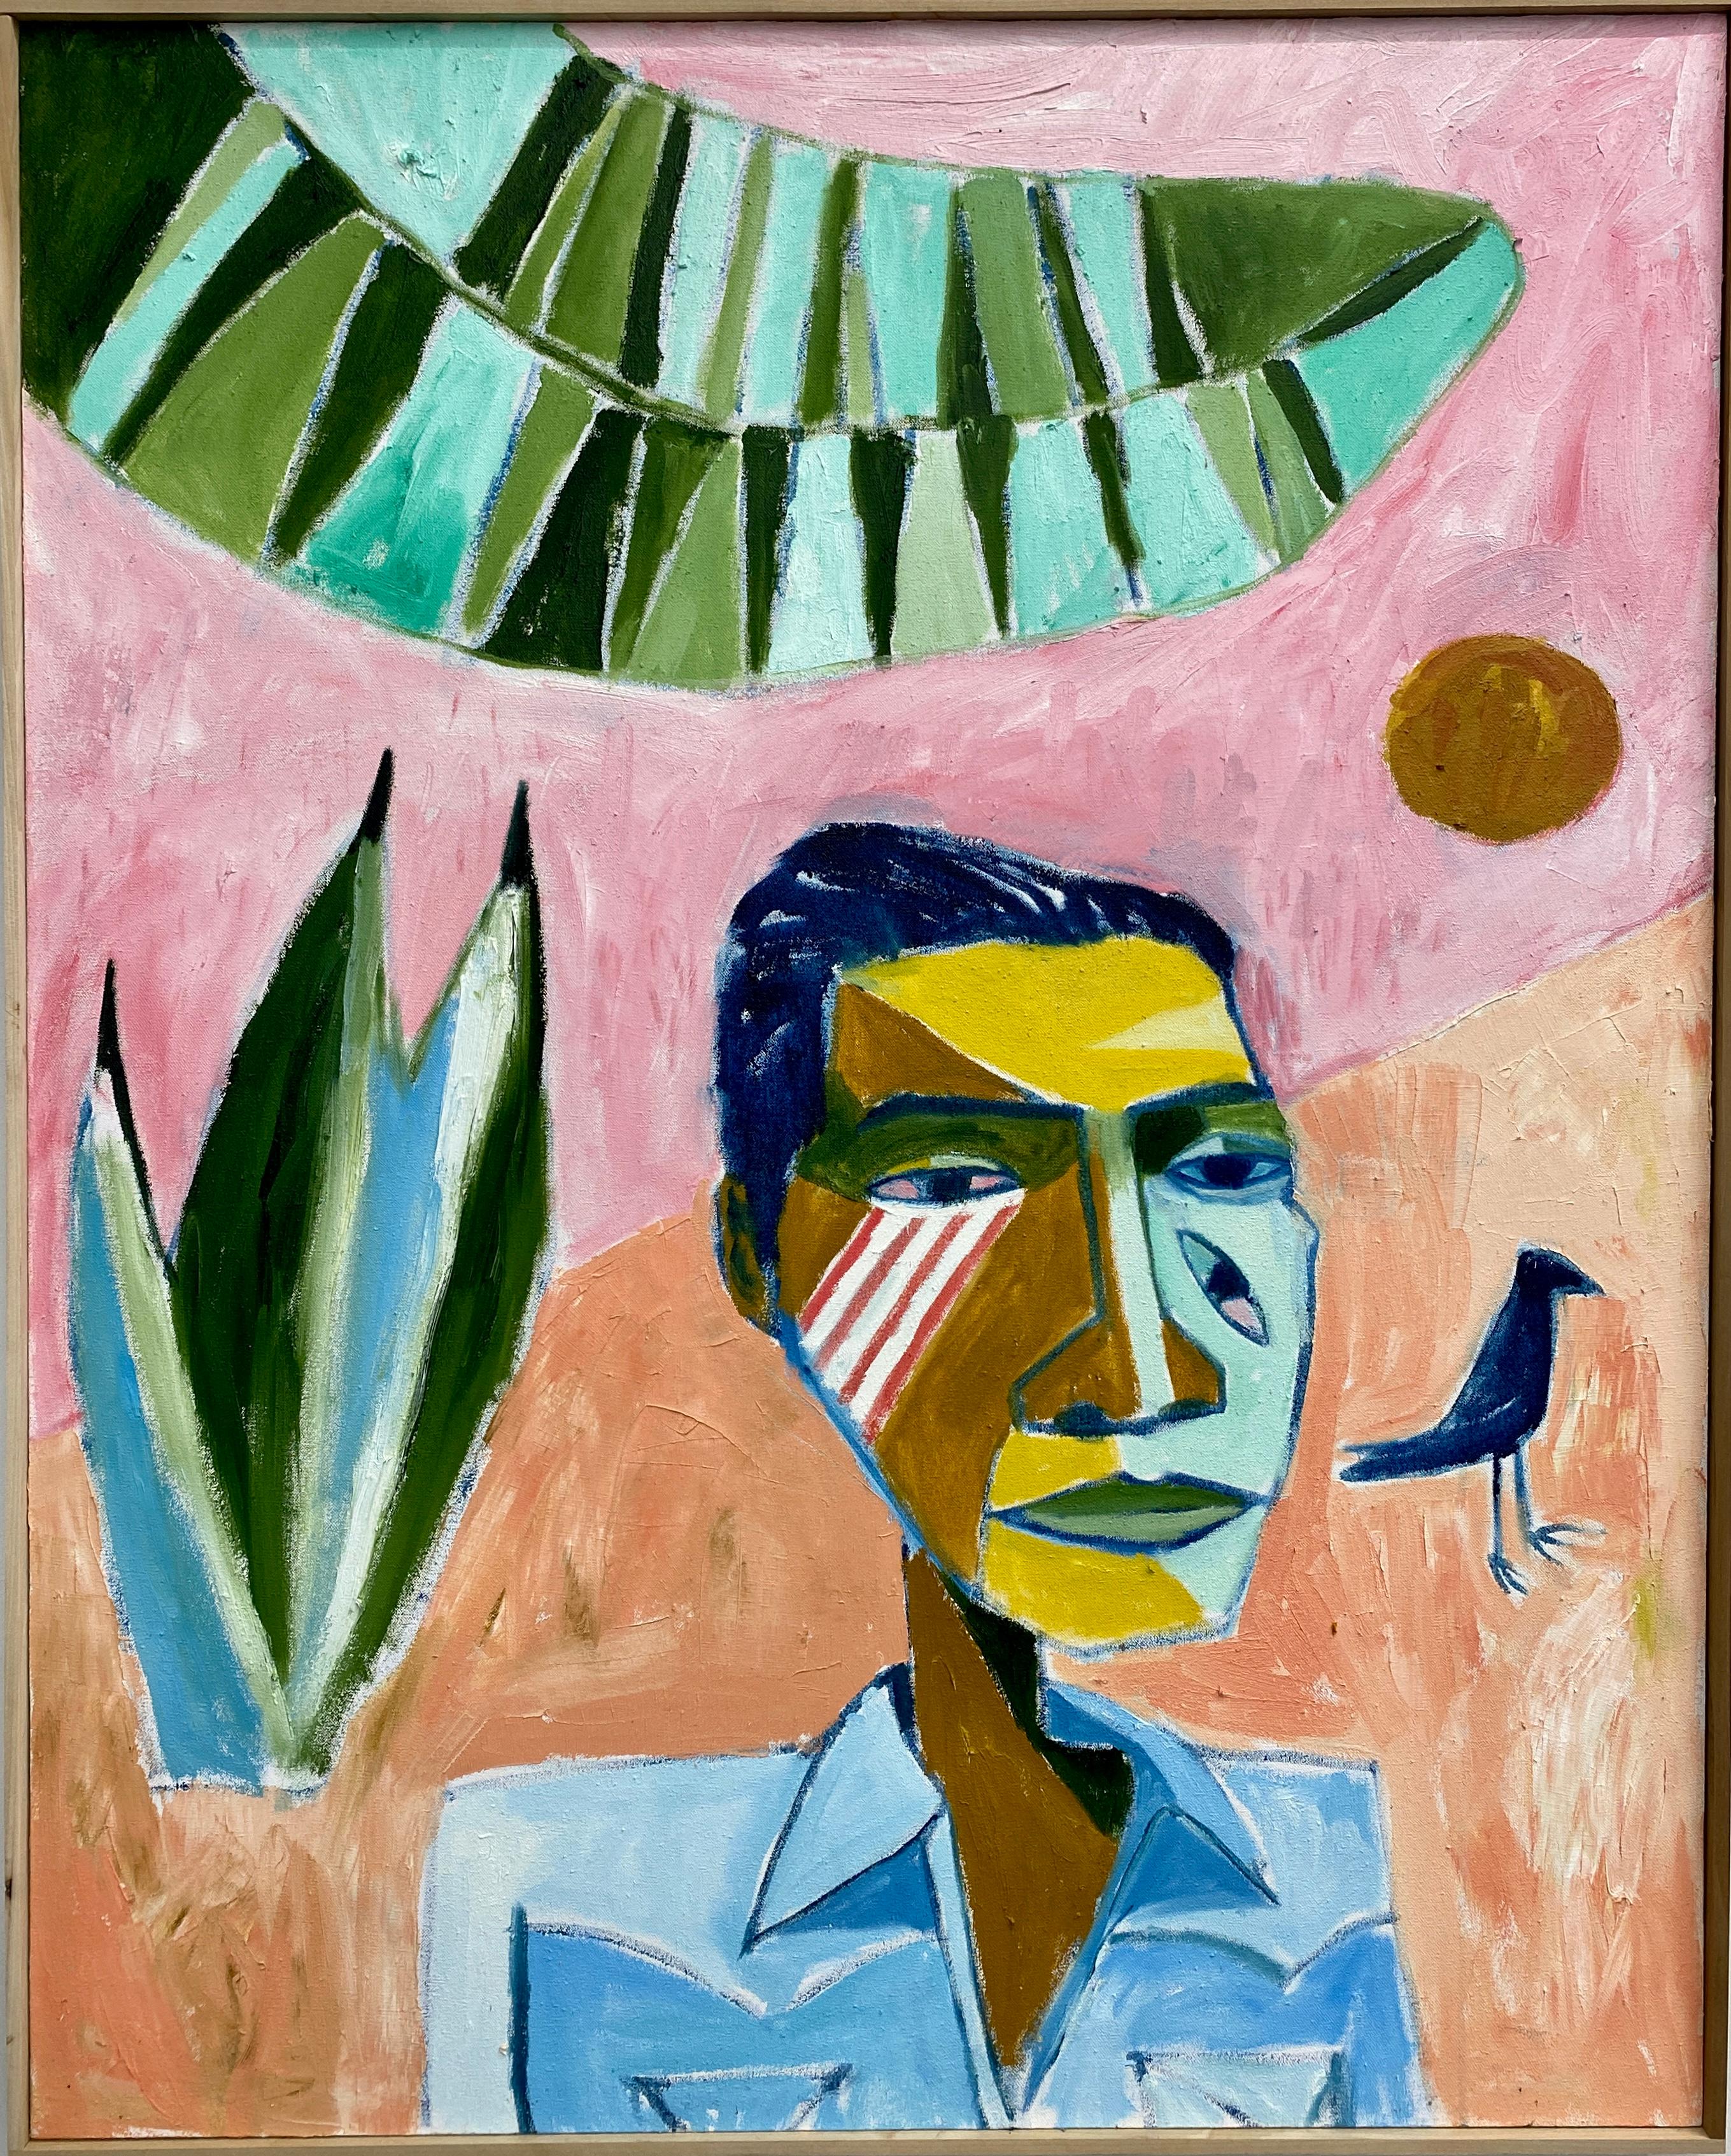 Cruz Ortiz Figurative Painting - Self Portrait with Black Bird, Contemporary Portrait Painting, Oil on Canvas